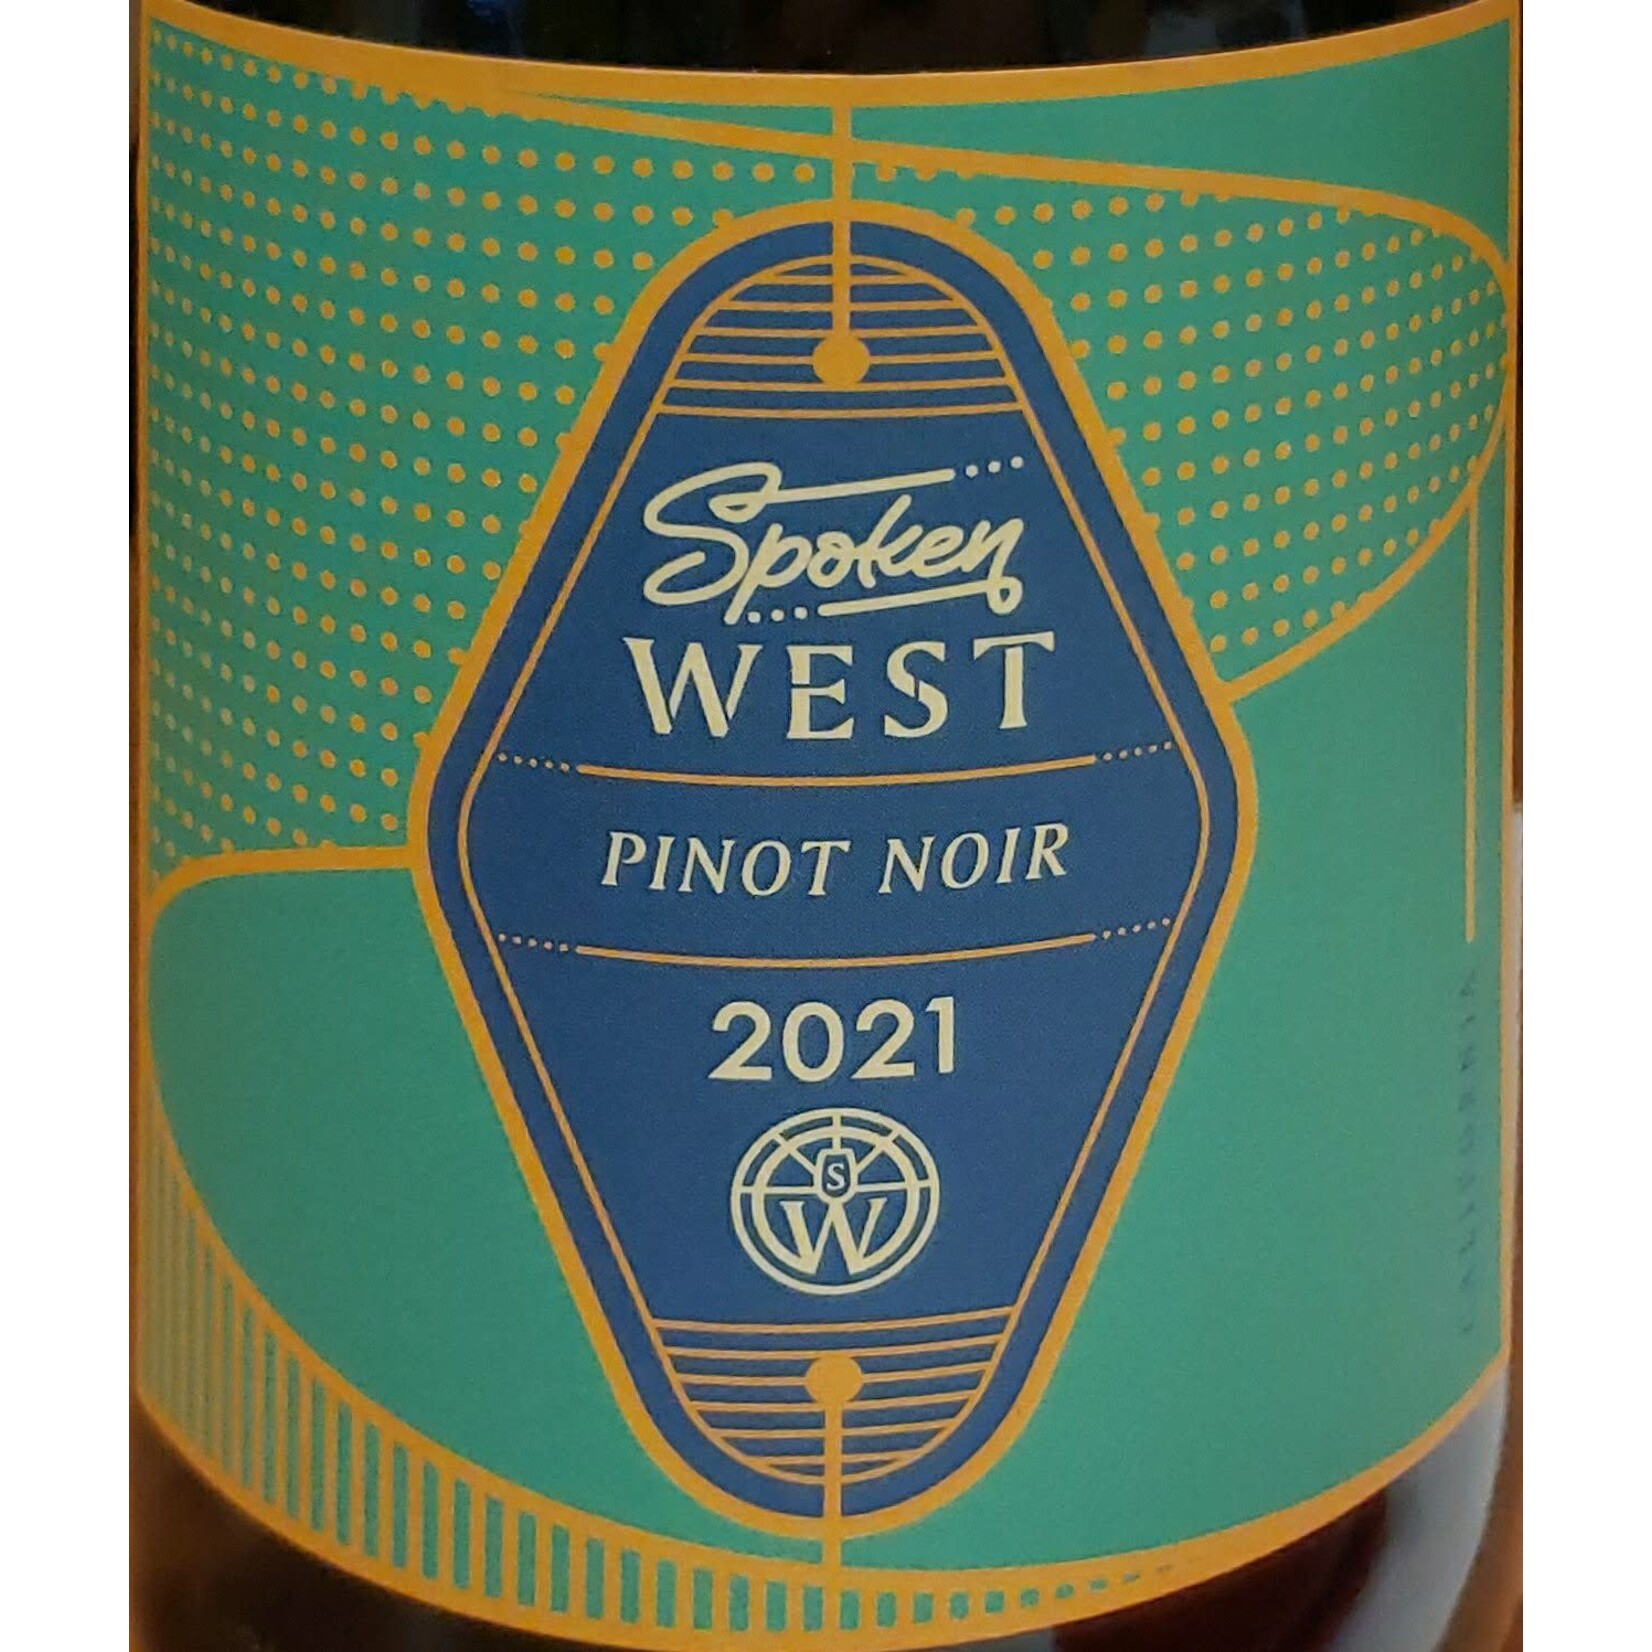 Spoken West Spoken West Pinot Noir 2021 California